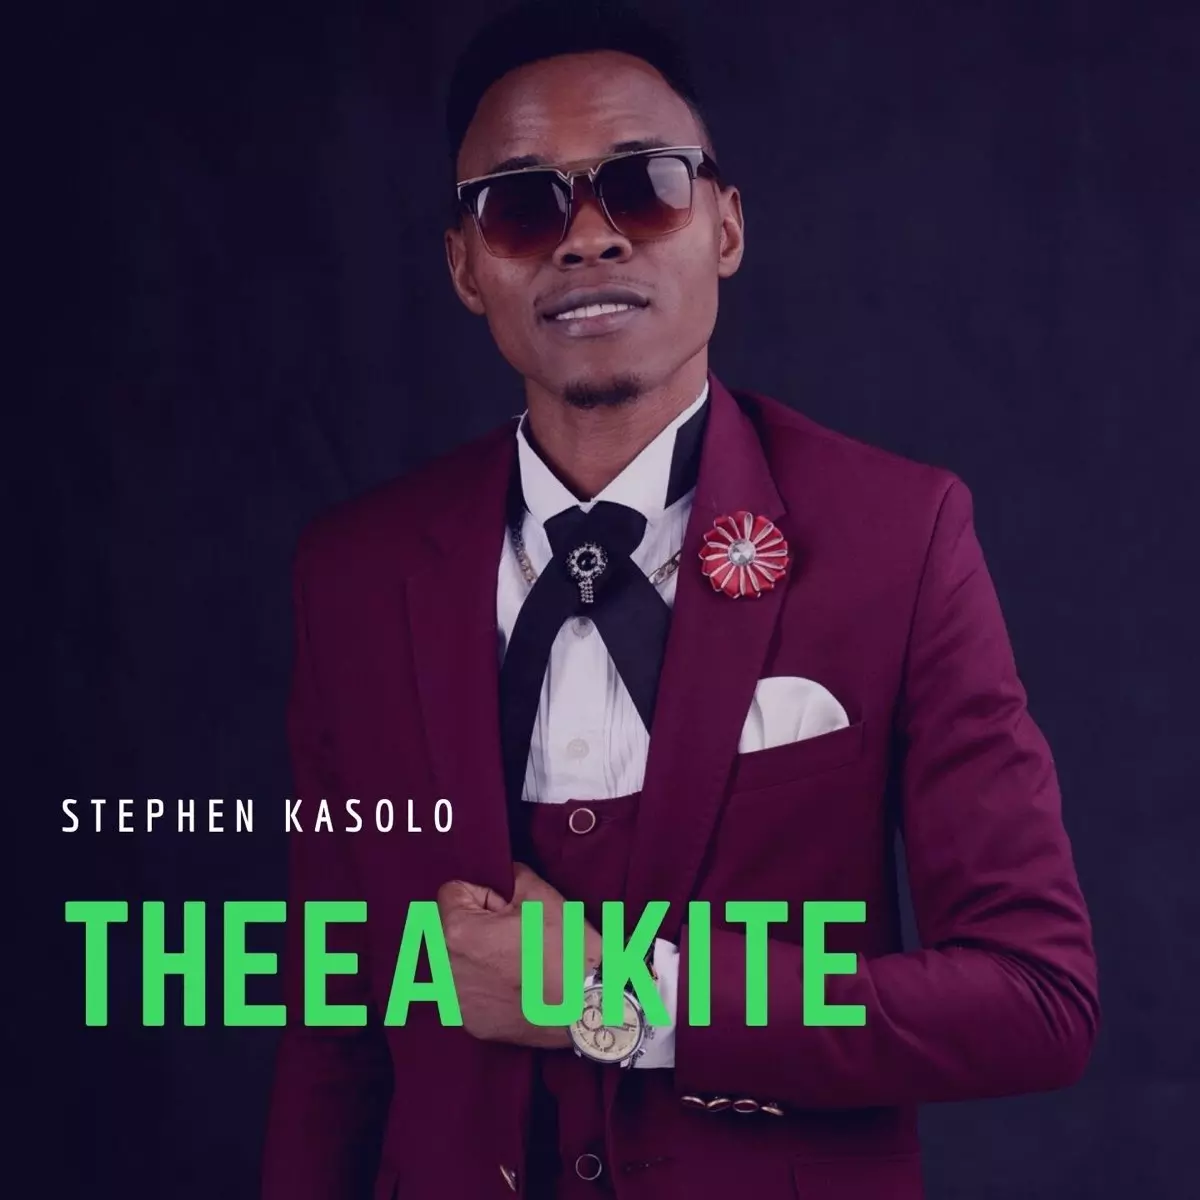 Theea Ukite - Single by Stephen Kasolo on Apple Music